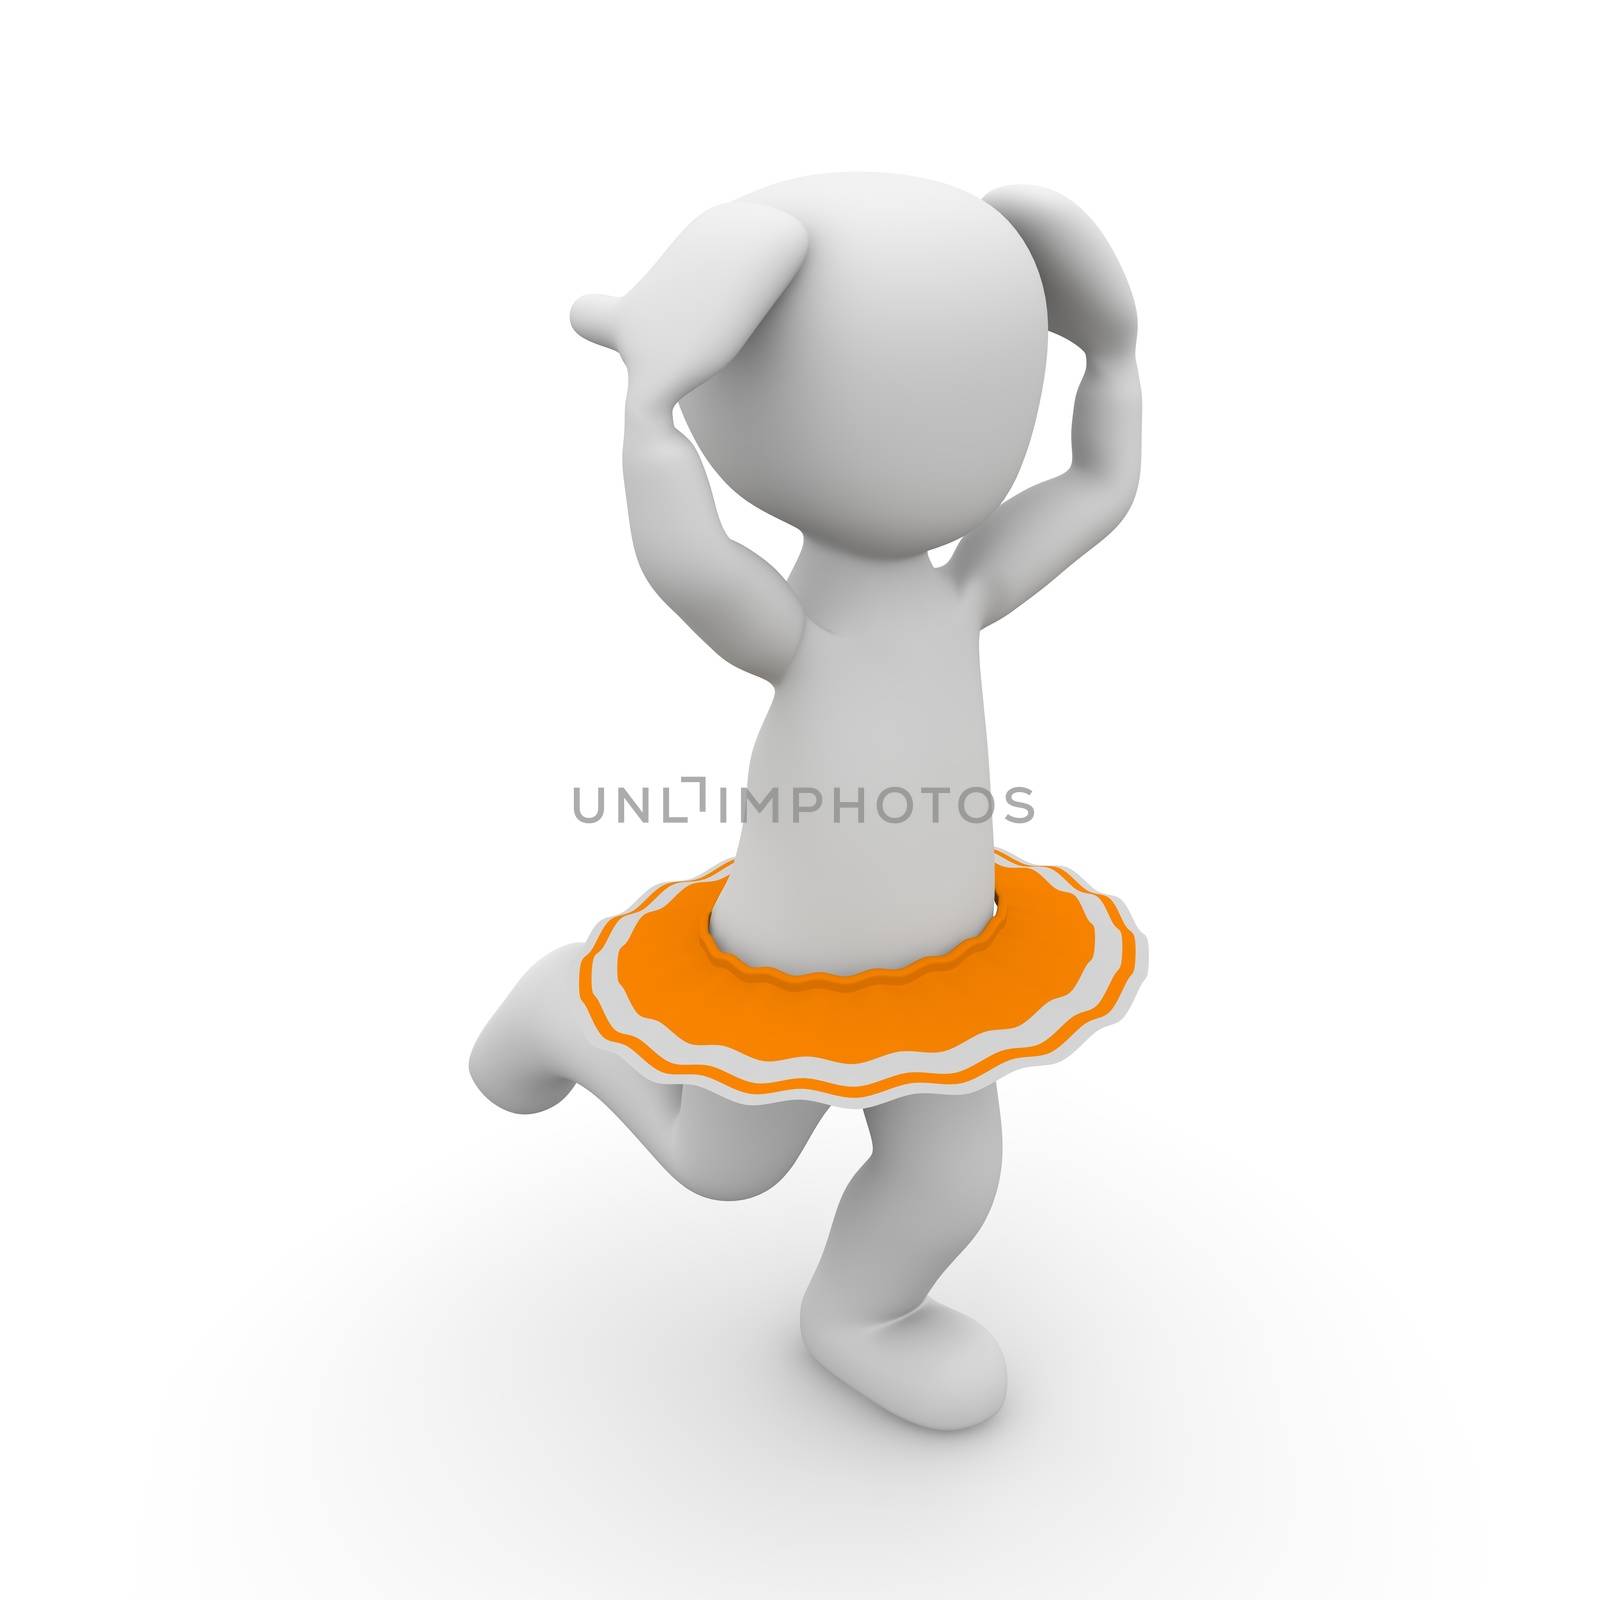 A 3D character dances ballet in a tutu.